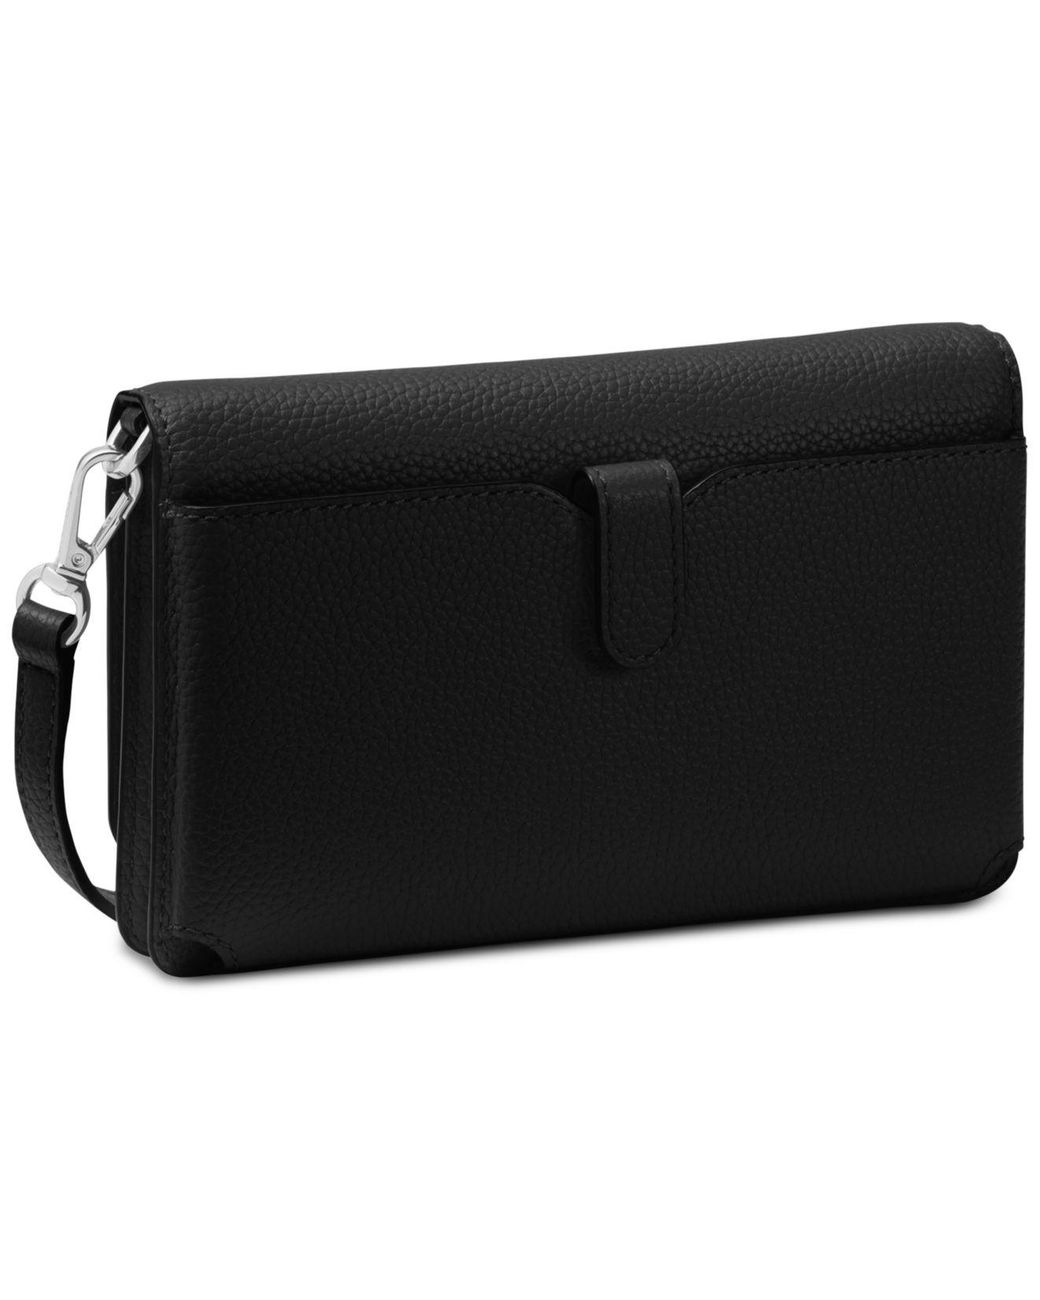 Michael Kors Mott Pebble Leather Phone Crossbody Wallet - Macy's